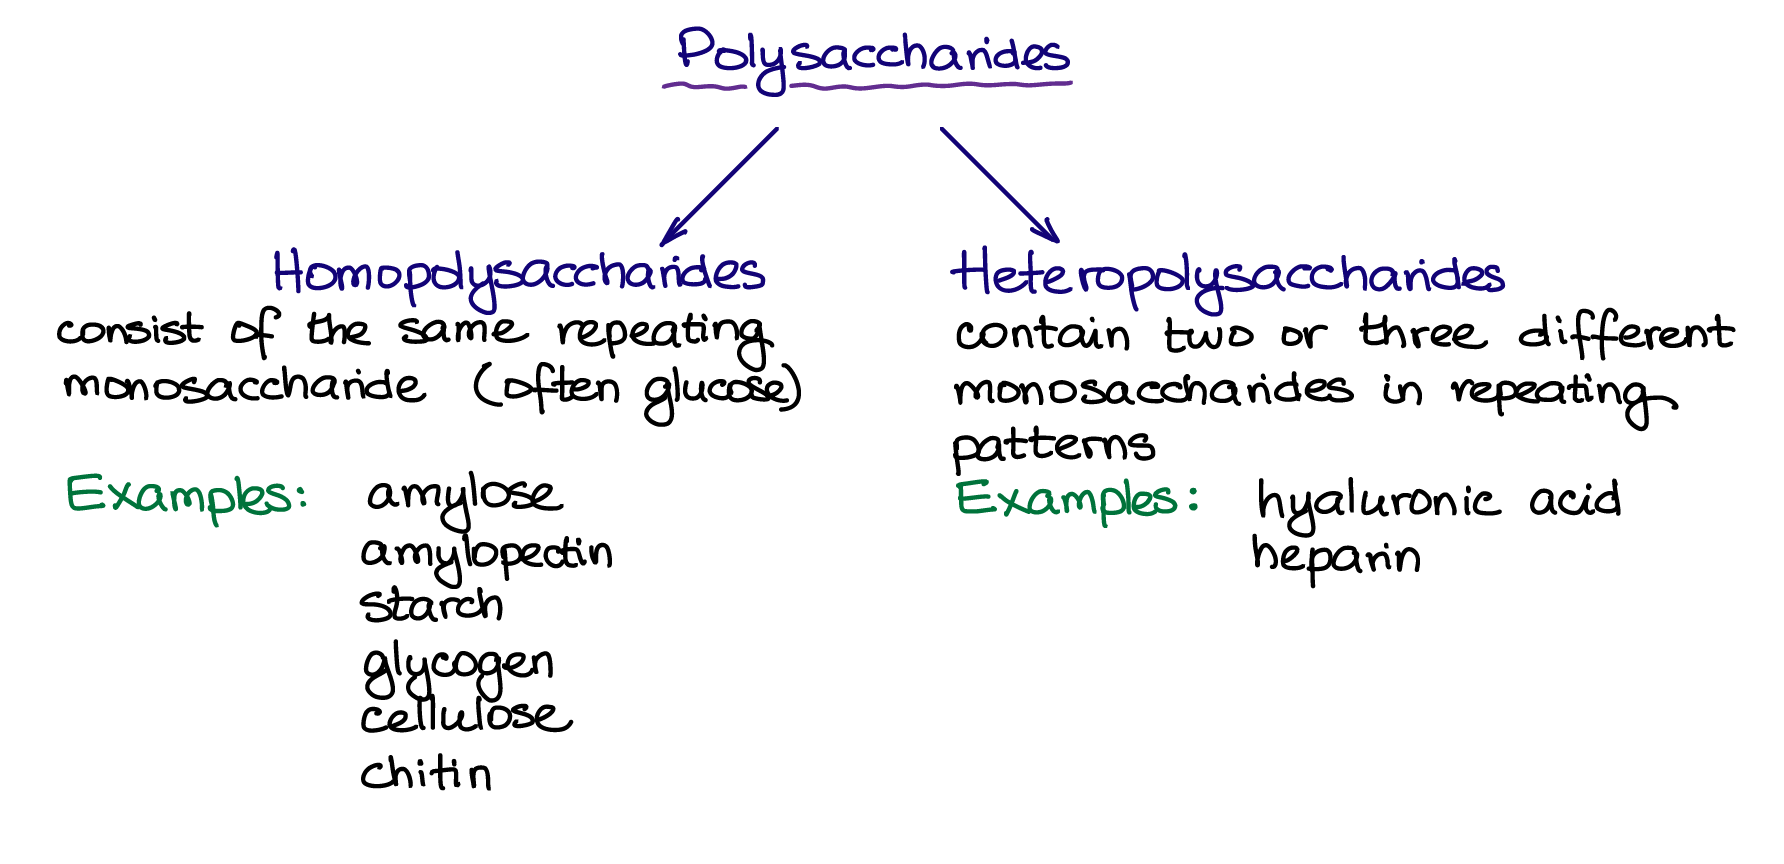 polysaccharides